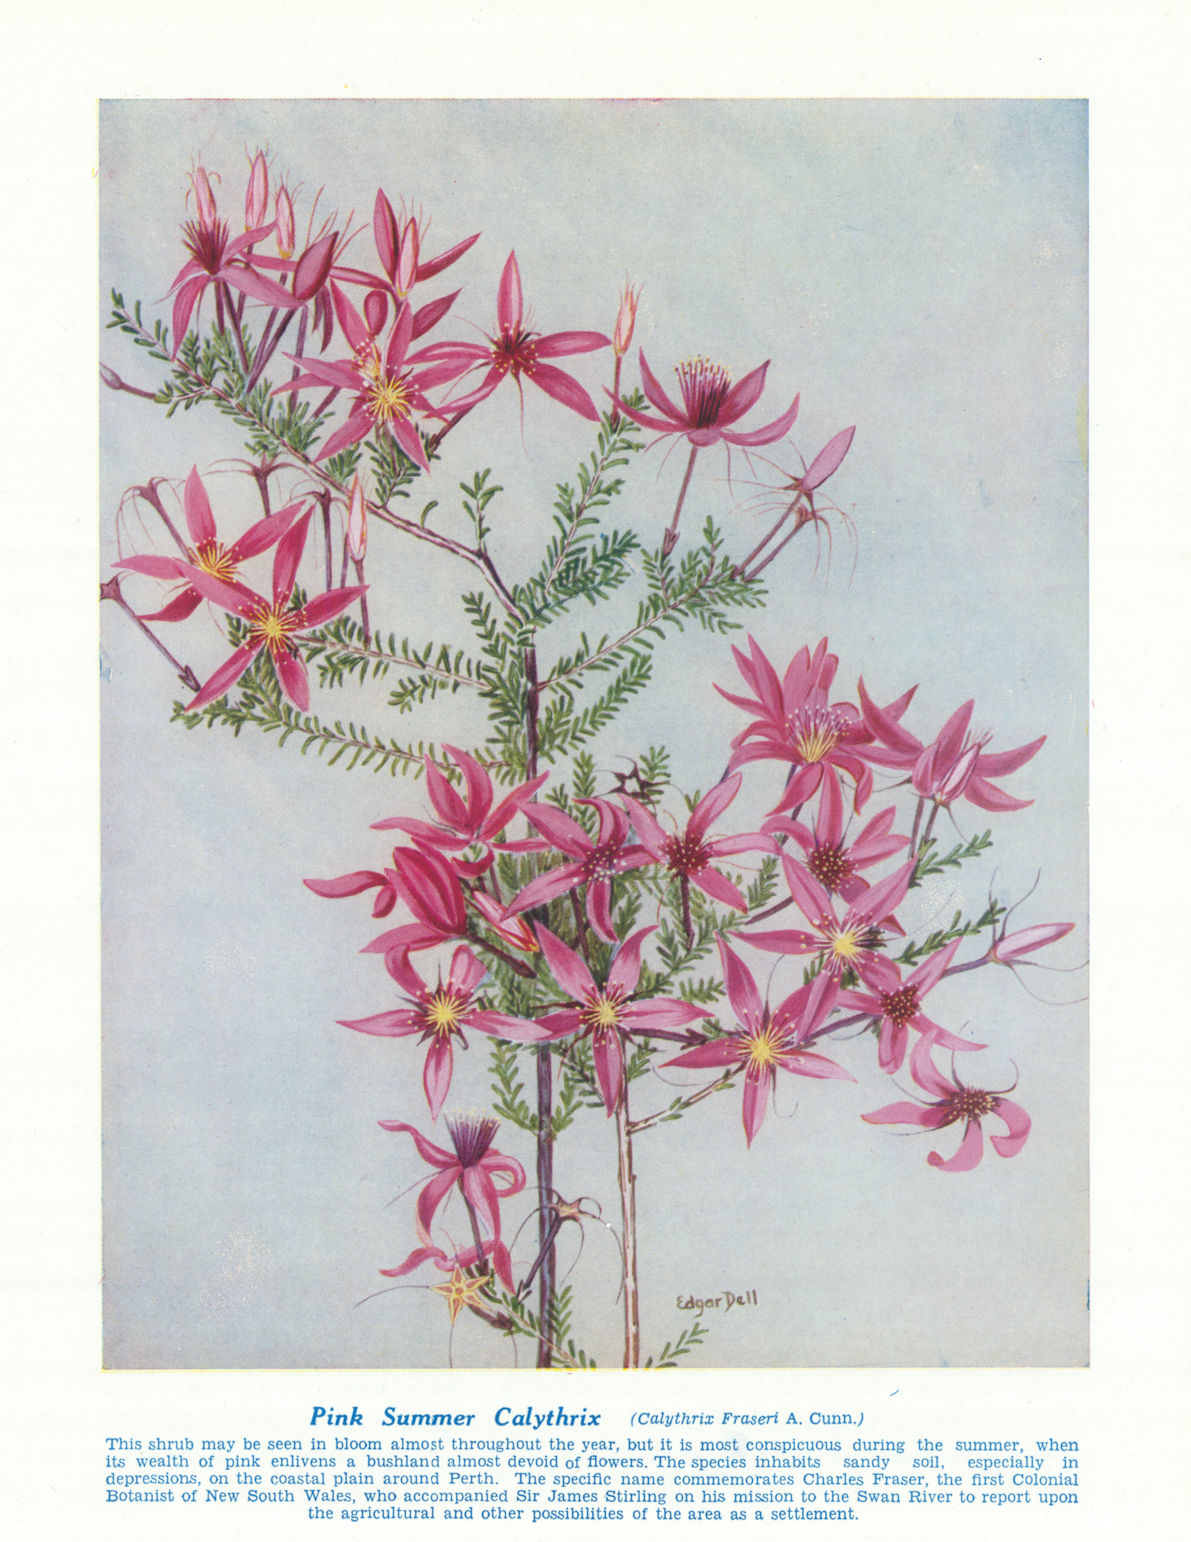 Pink Summer Calythrix (Calythrix Fraseri). West Australian Wild Flowers 1950